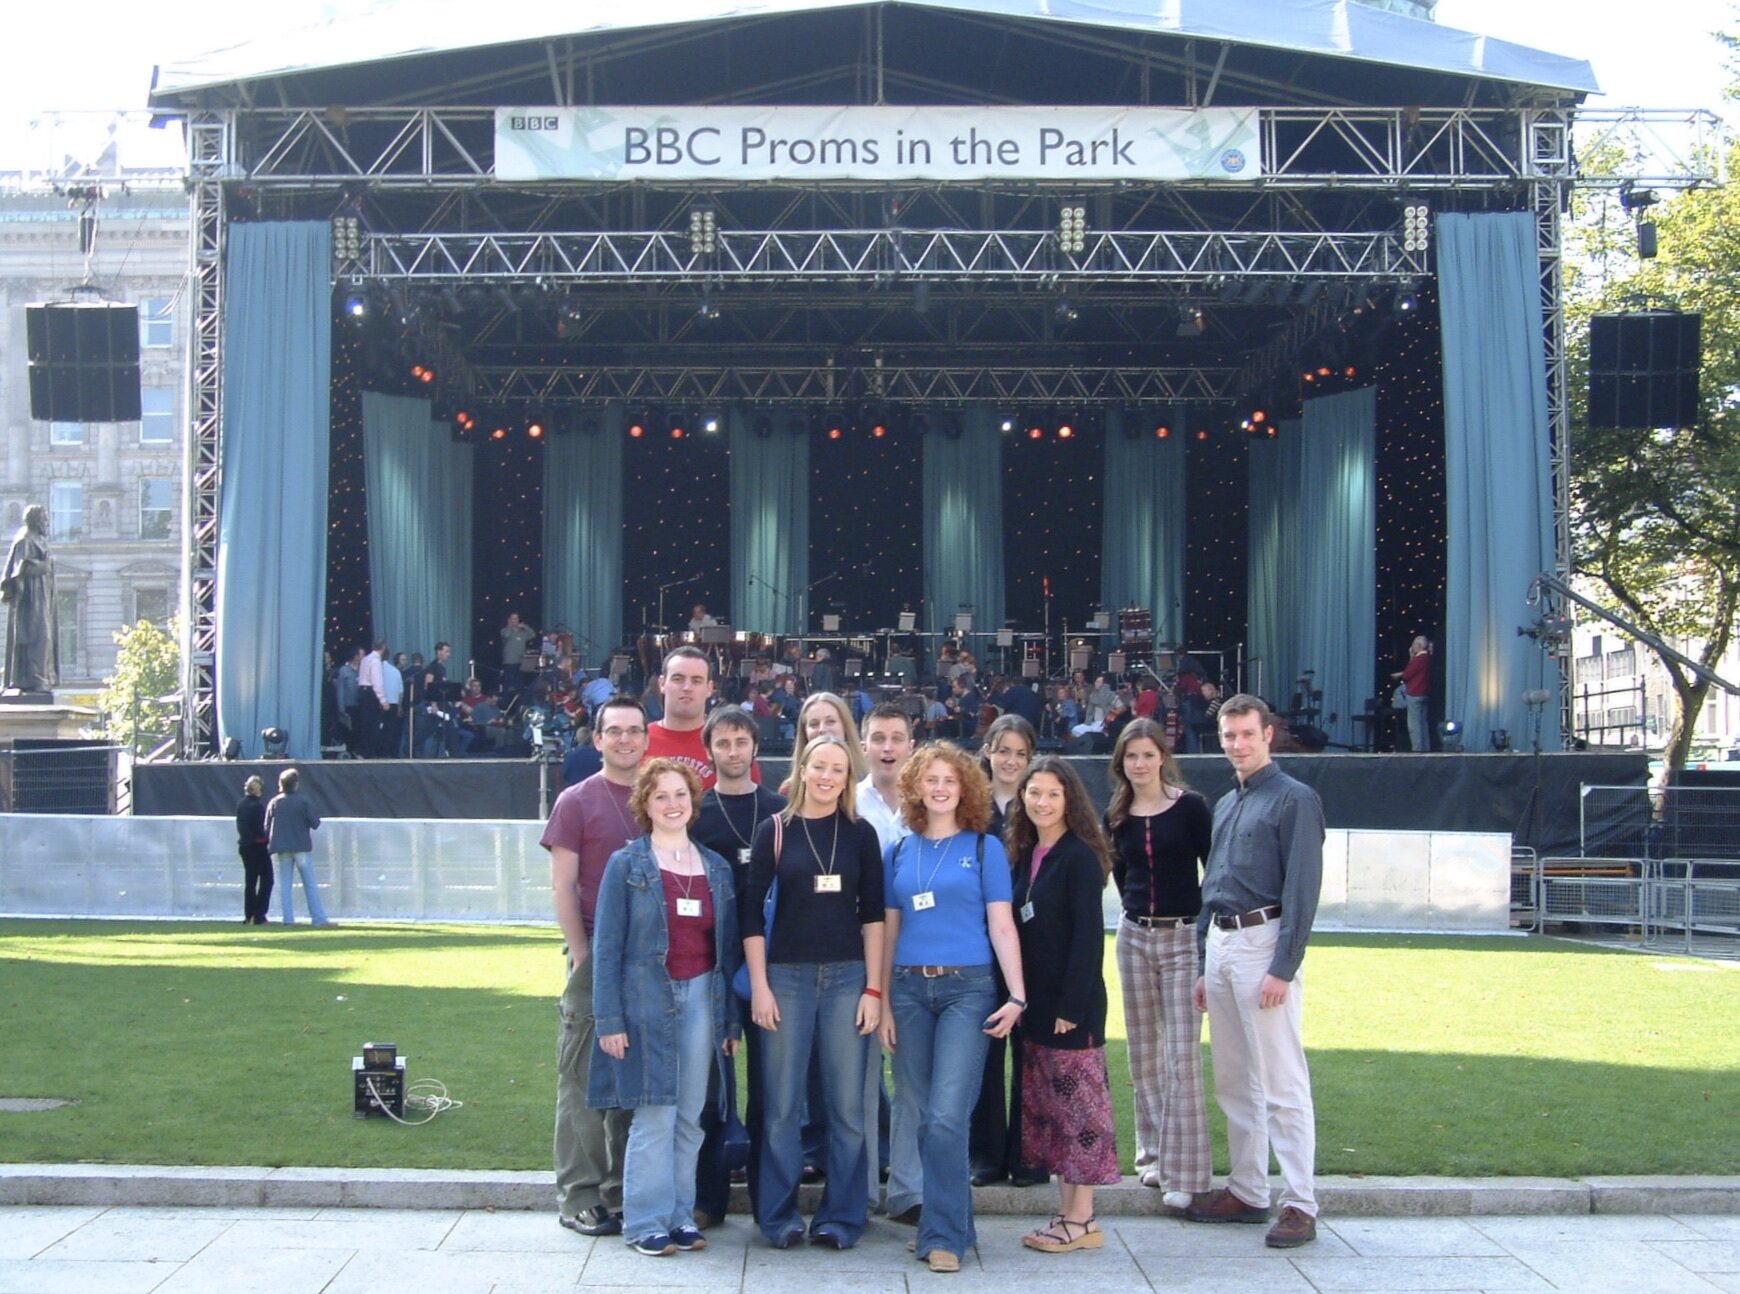   2002 - Proms in the Park, Belfast  